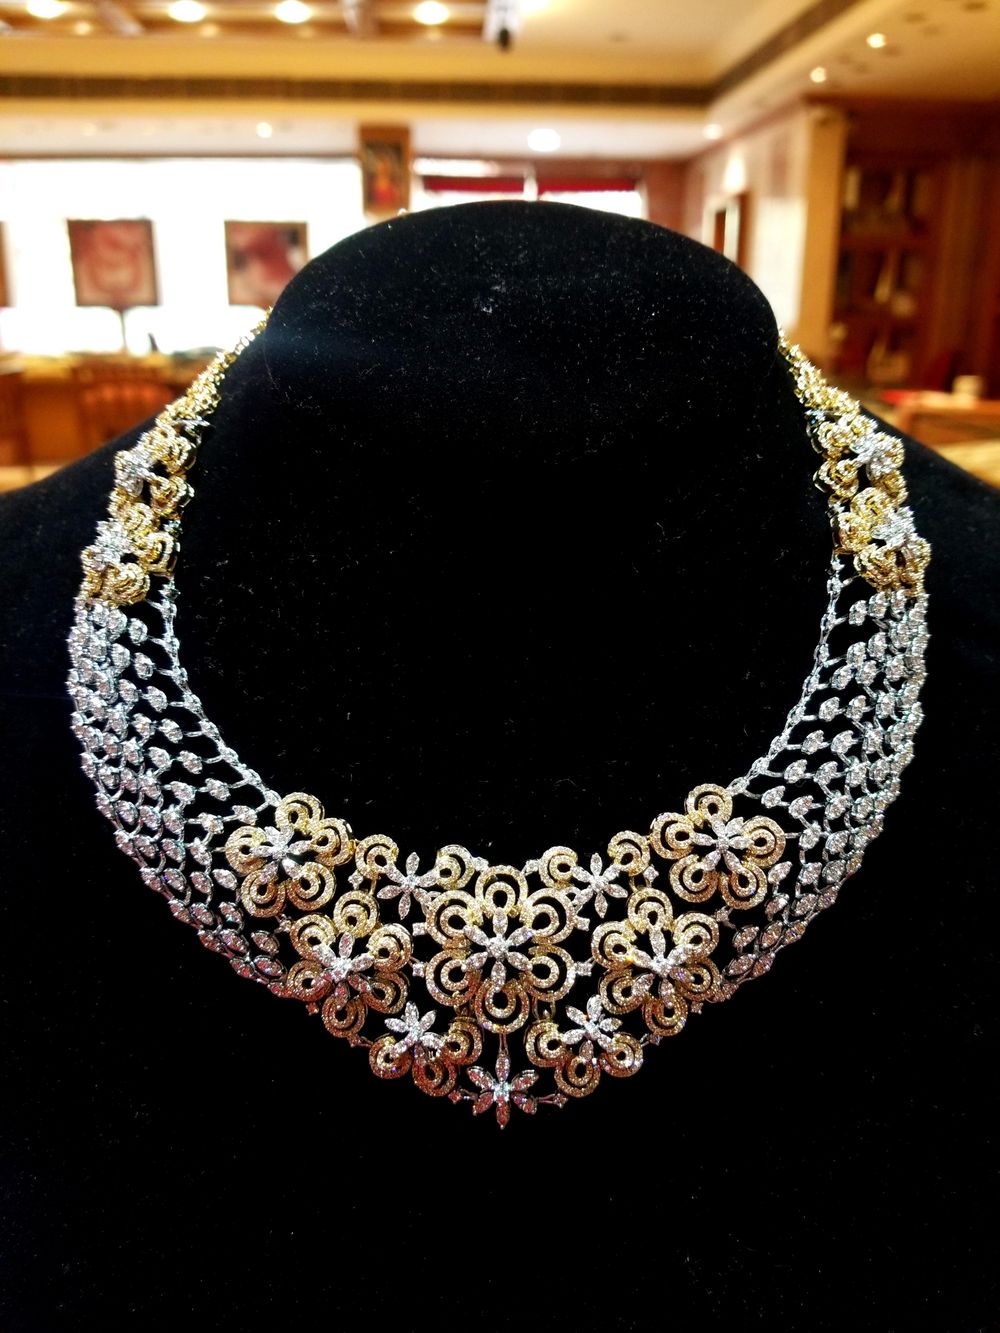 Photo From Diamond Jewelry - By Rawalpindi Jewellers